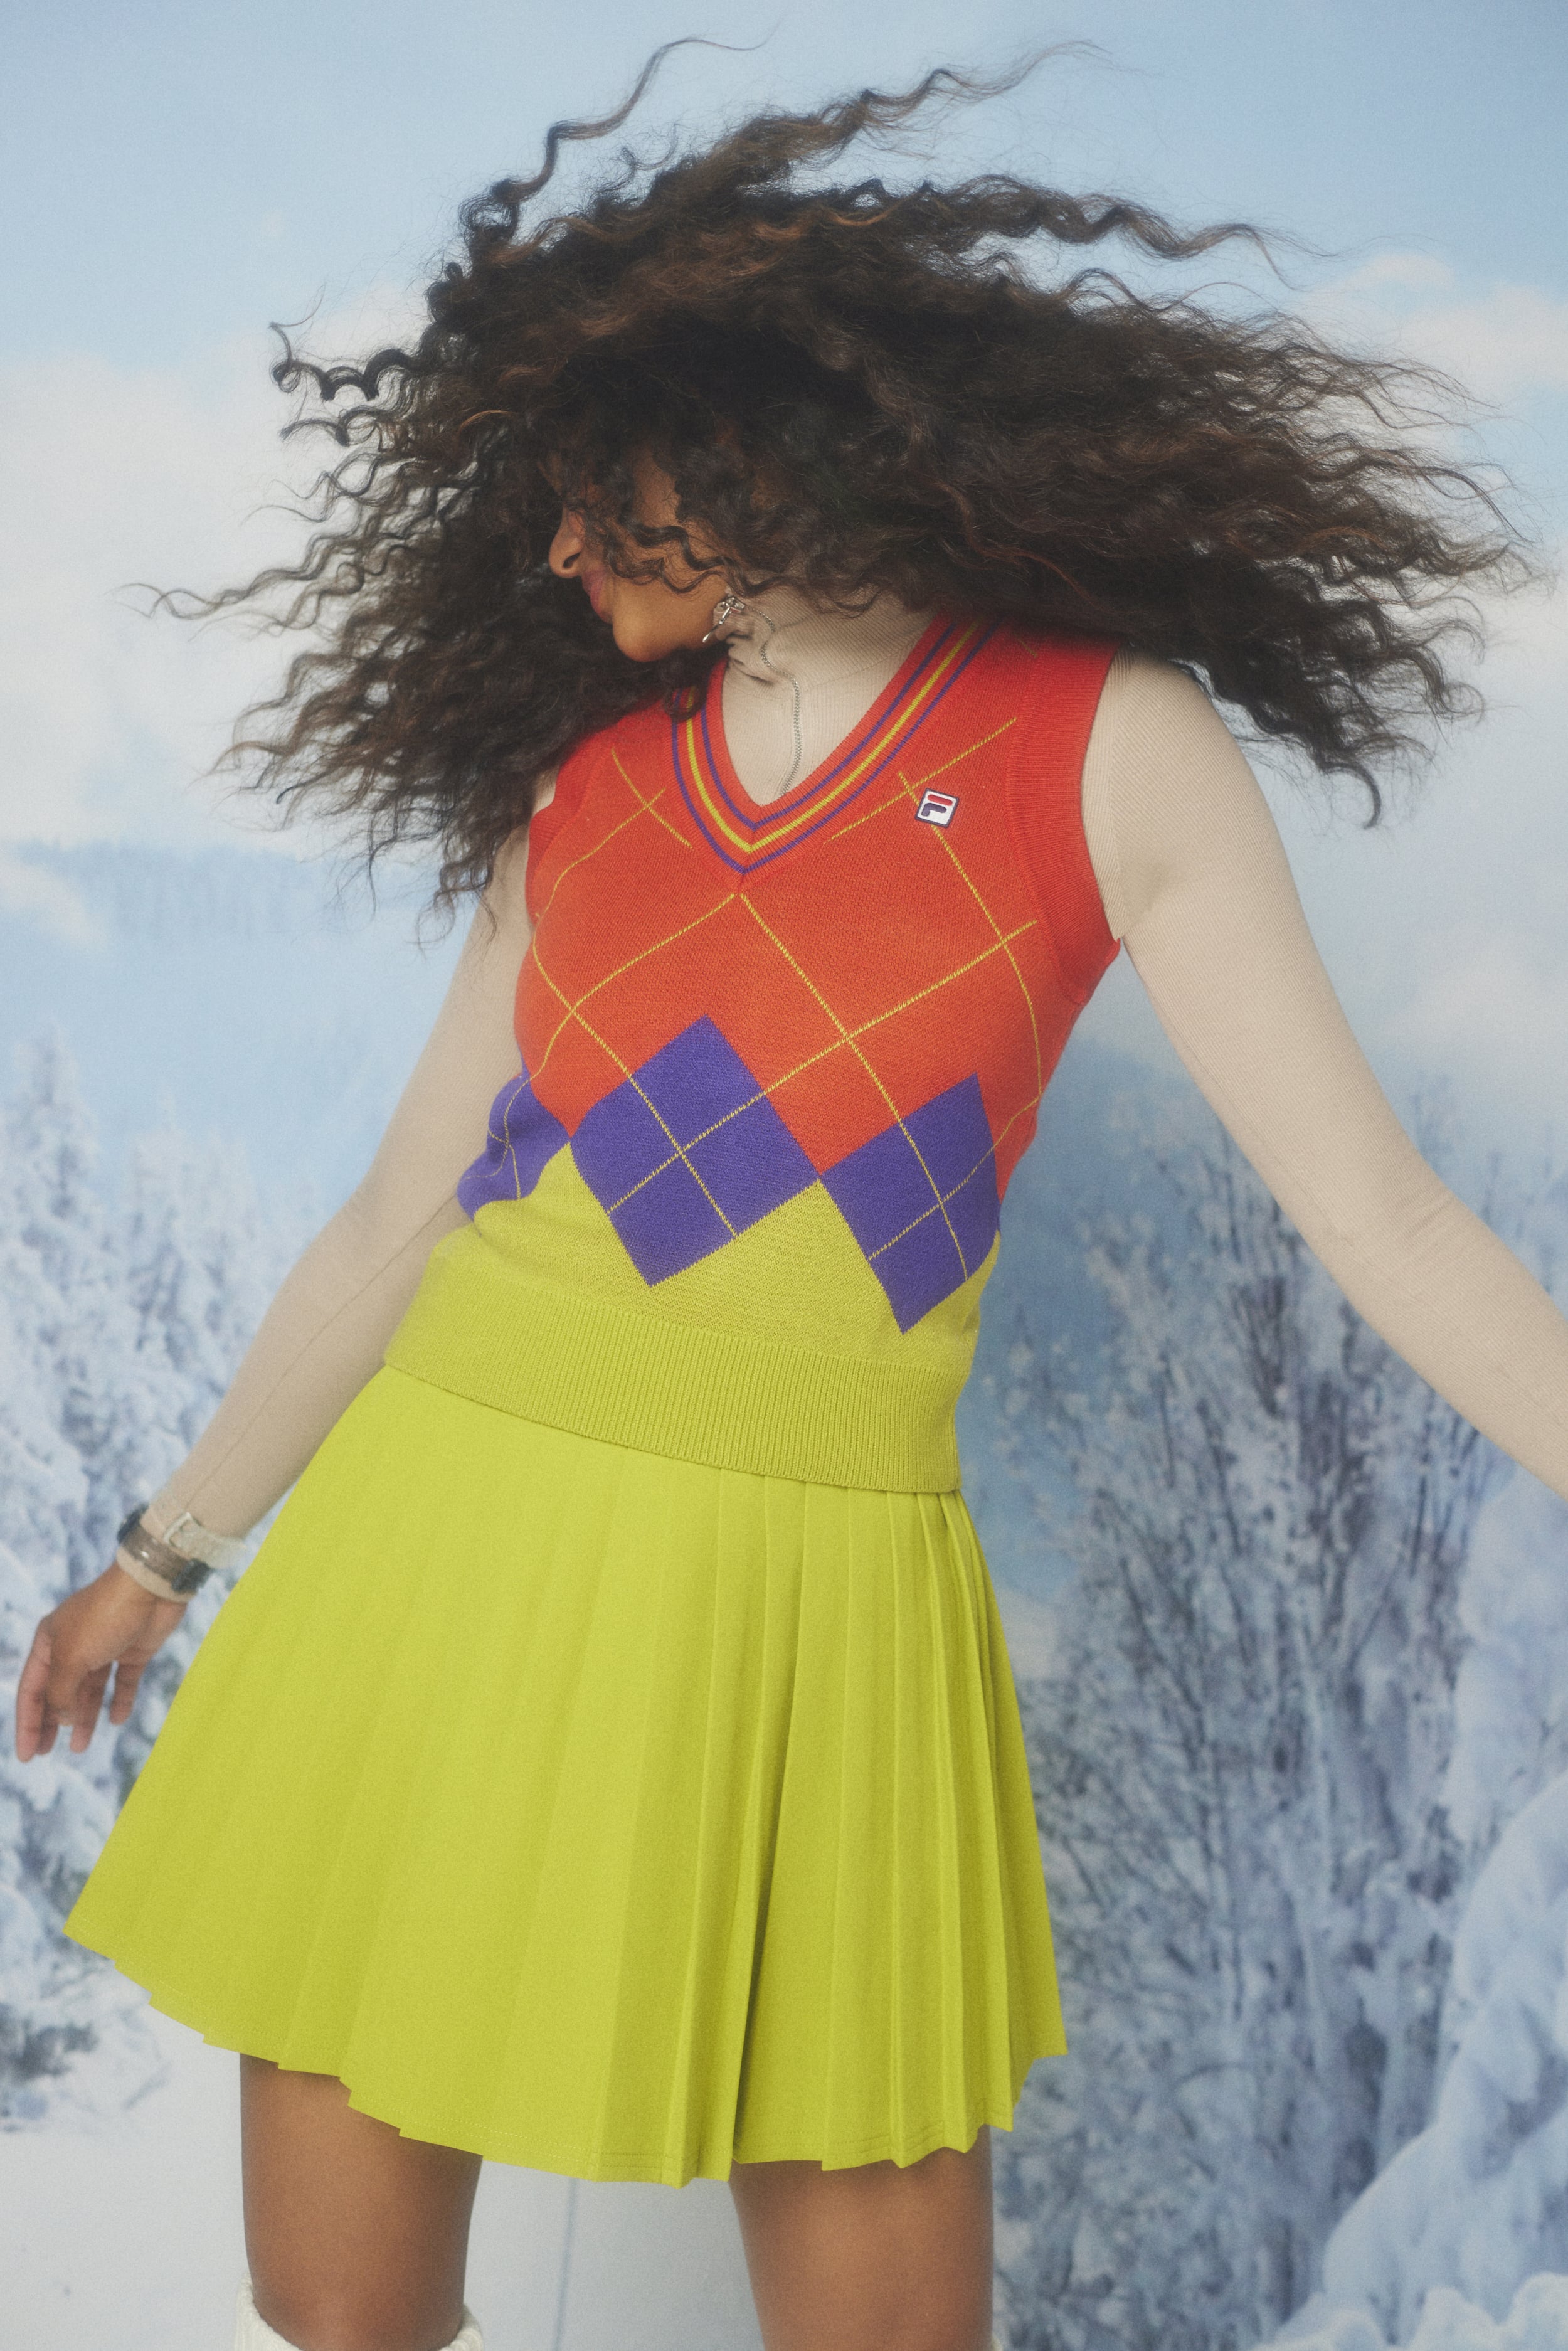 binde rødme kaos Urban Outfitters x Fila Ski Collection | POPSUGAR Fashion